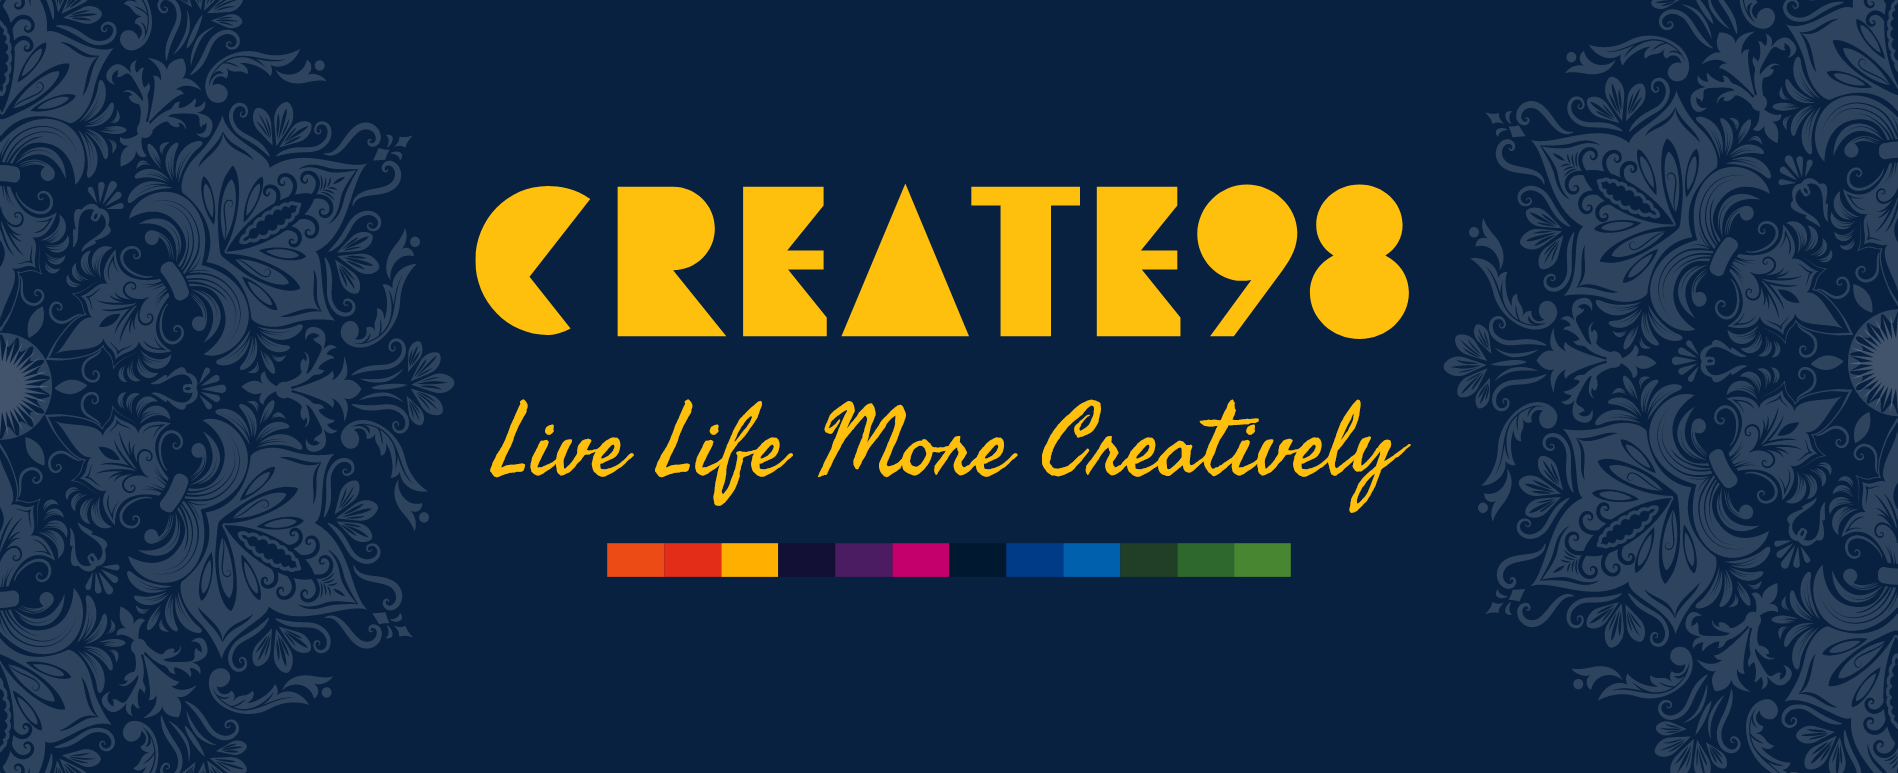 Create98